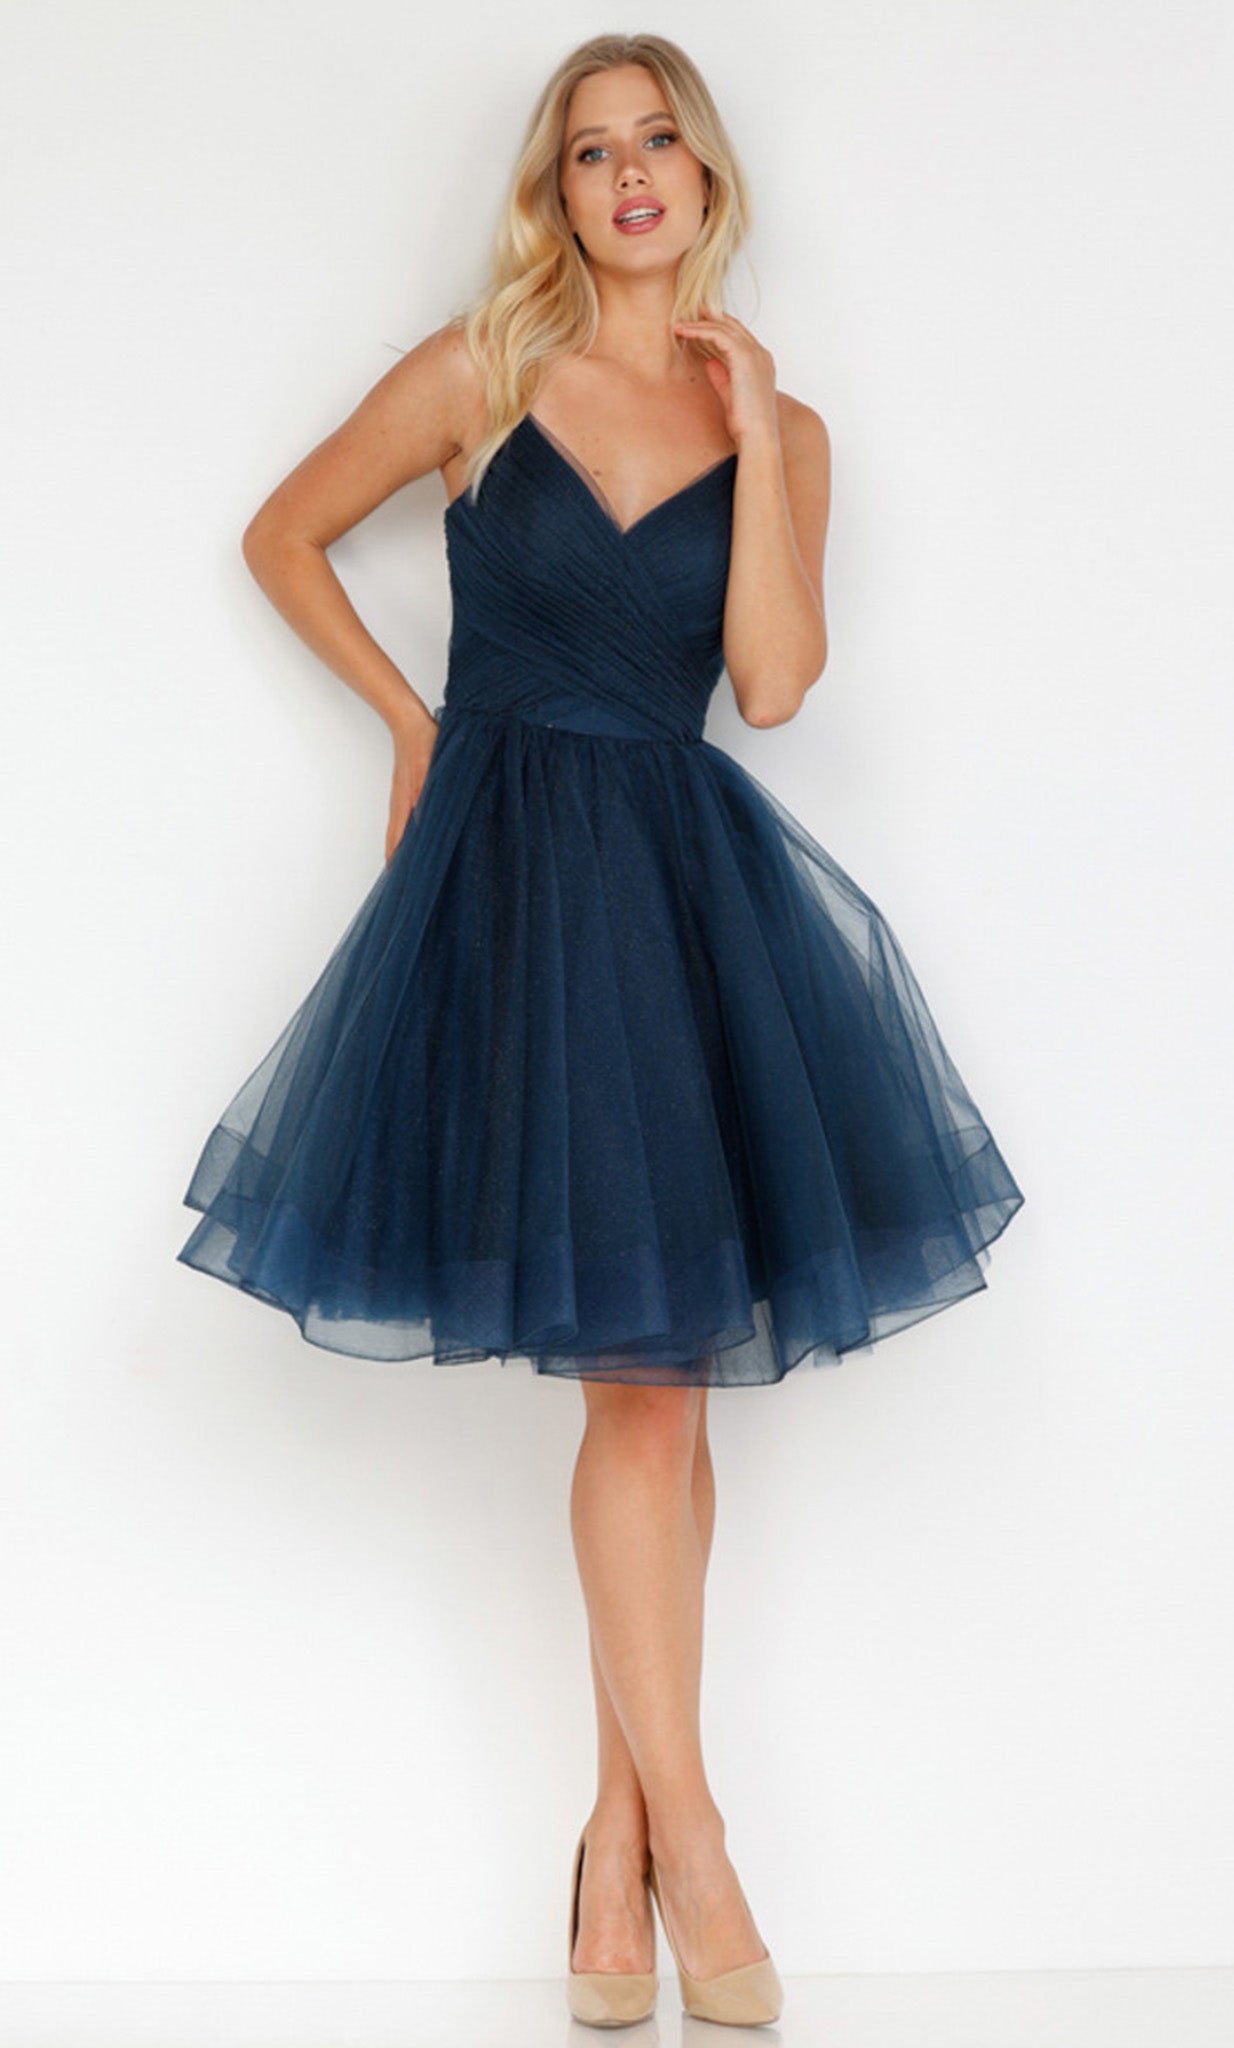 Terani Couture 1821H7761 in Bluegrade 8 grad dresses, graduation dresses